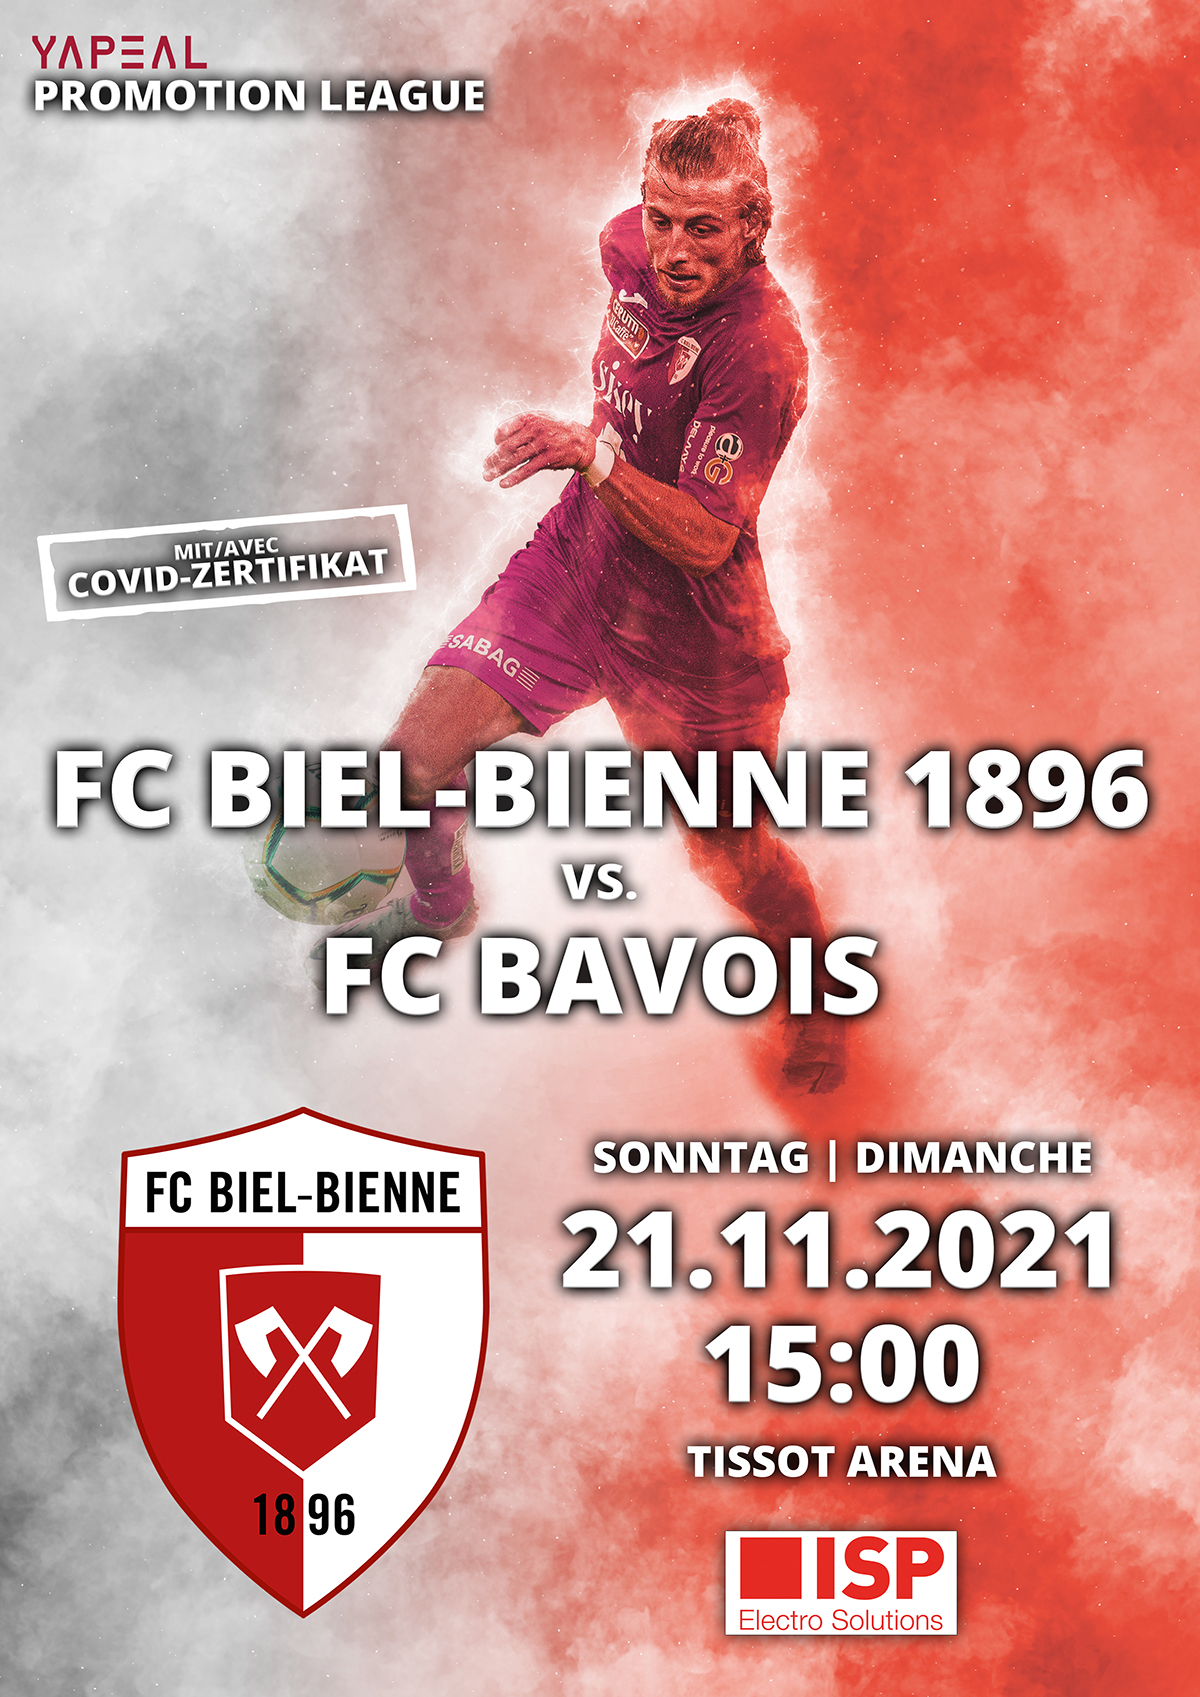 FC Biel-Bienne 1896 vs. FC Bavois